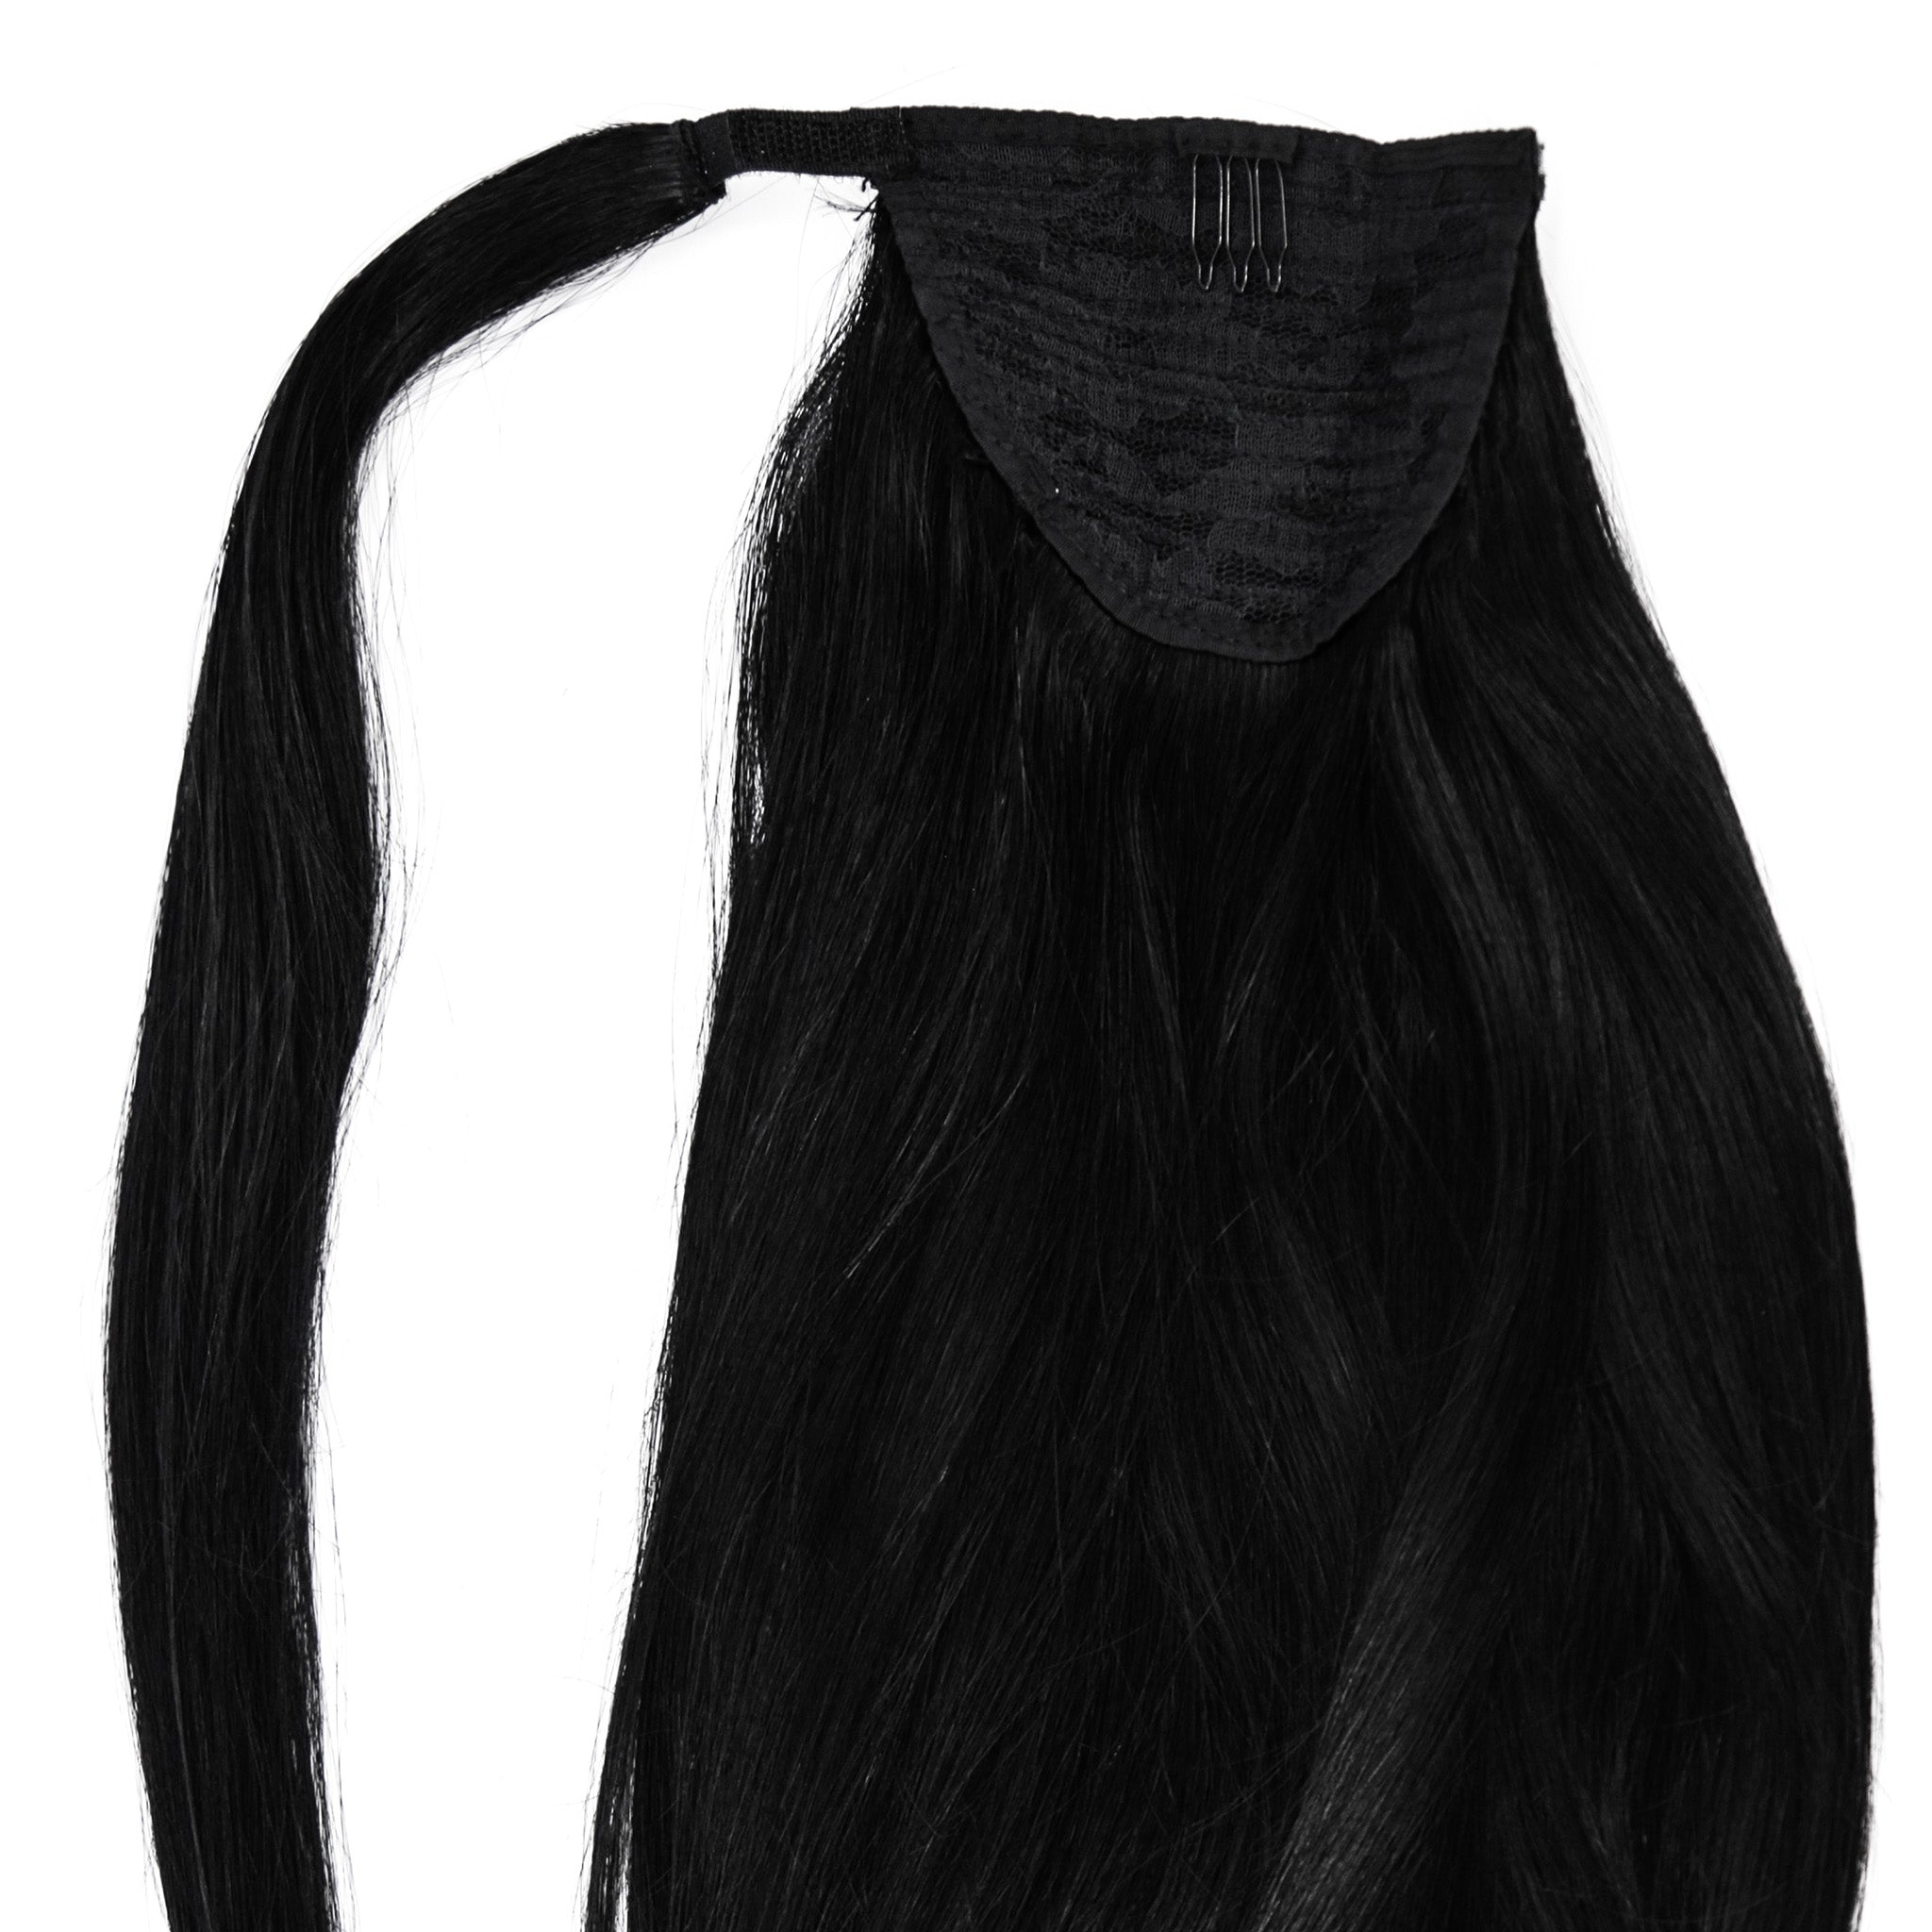 #1 Ponytail Hair Extension